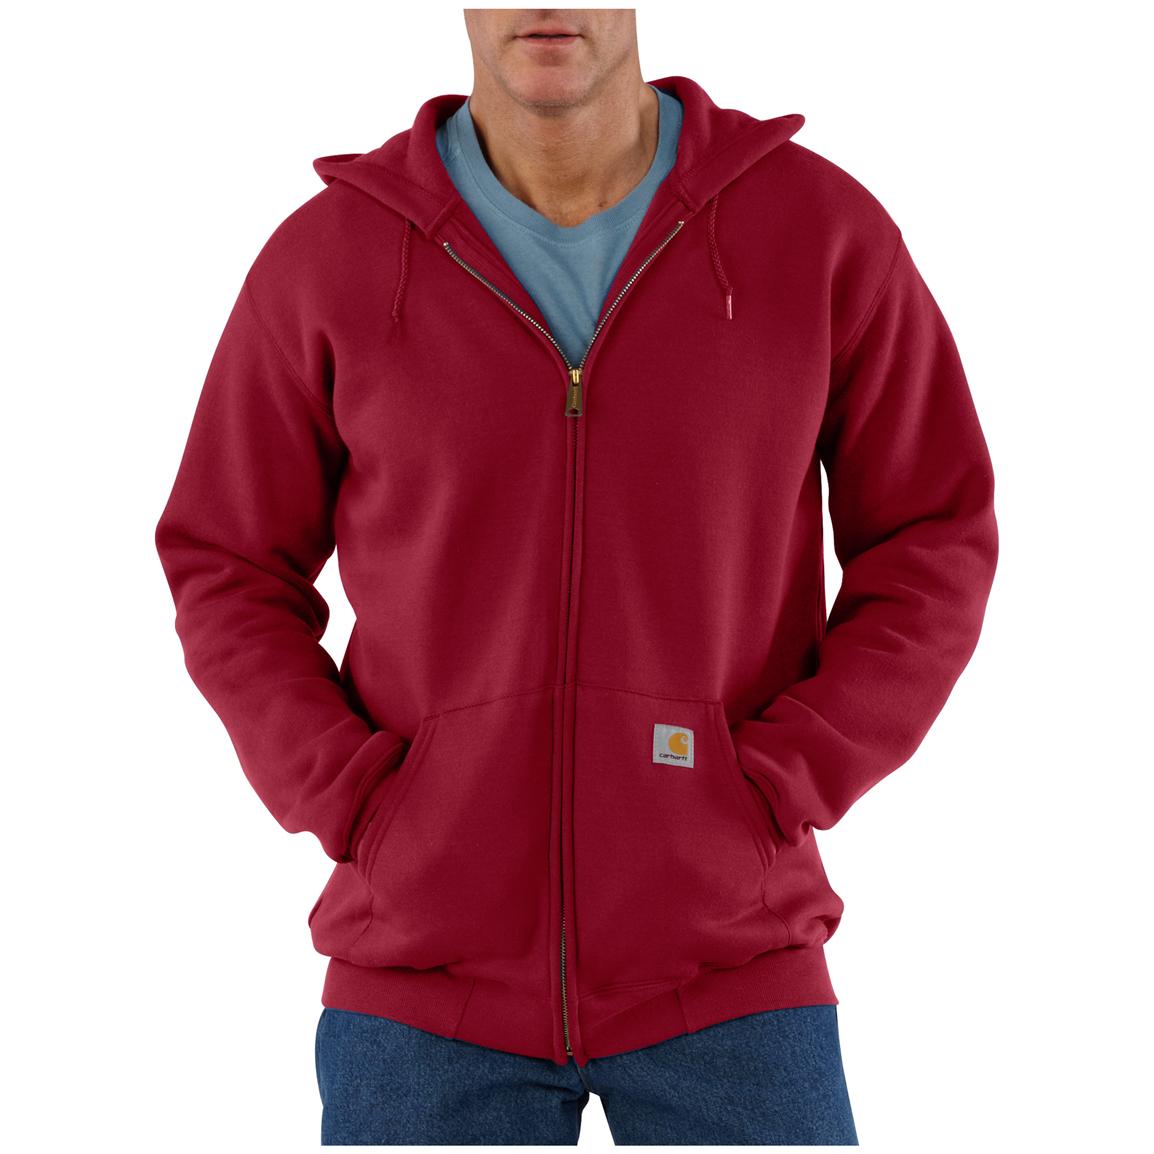 Carhartt Midweight Hooded Zip-Front Sweatshirt - 108620, Sweatshirts & Hoodies at Sportsman's Guide